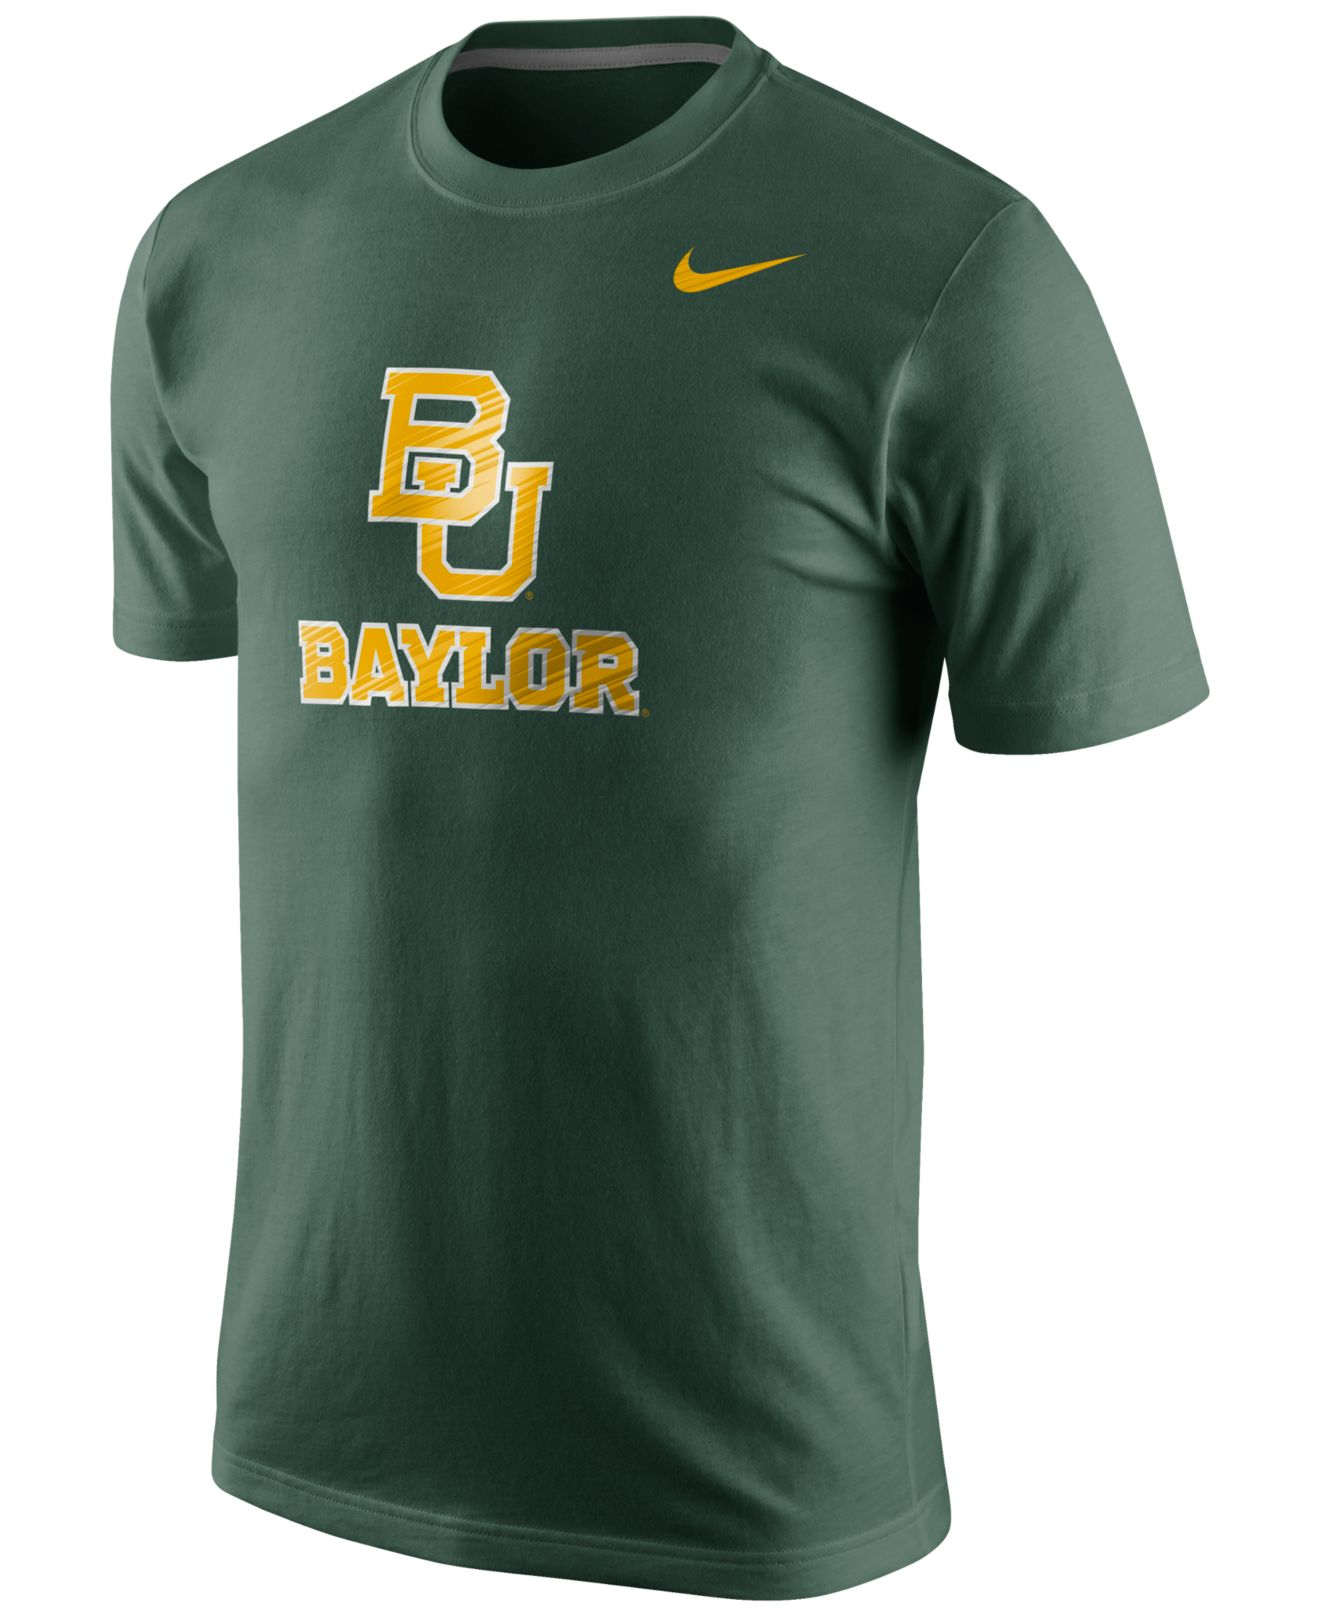 Lyst - Nike Men's Baylor Bears Warp Logo T-shirt in Green for Men